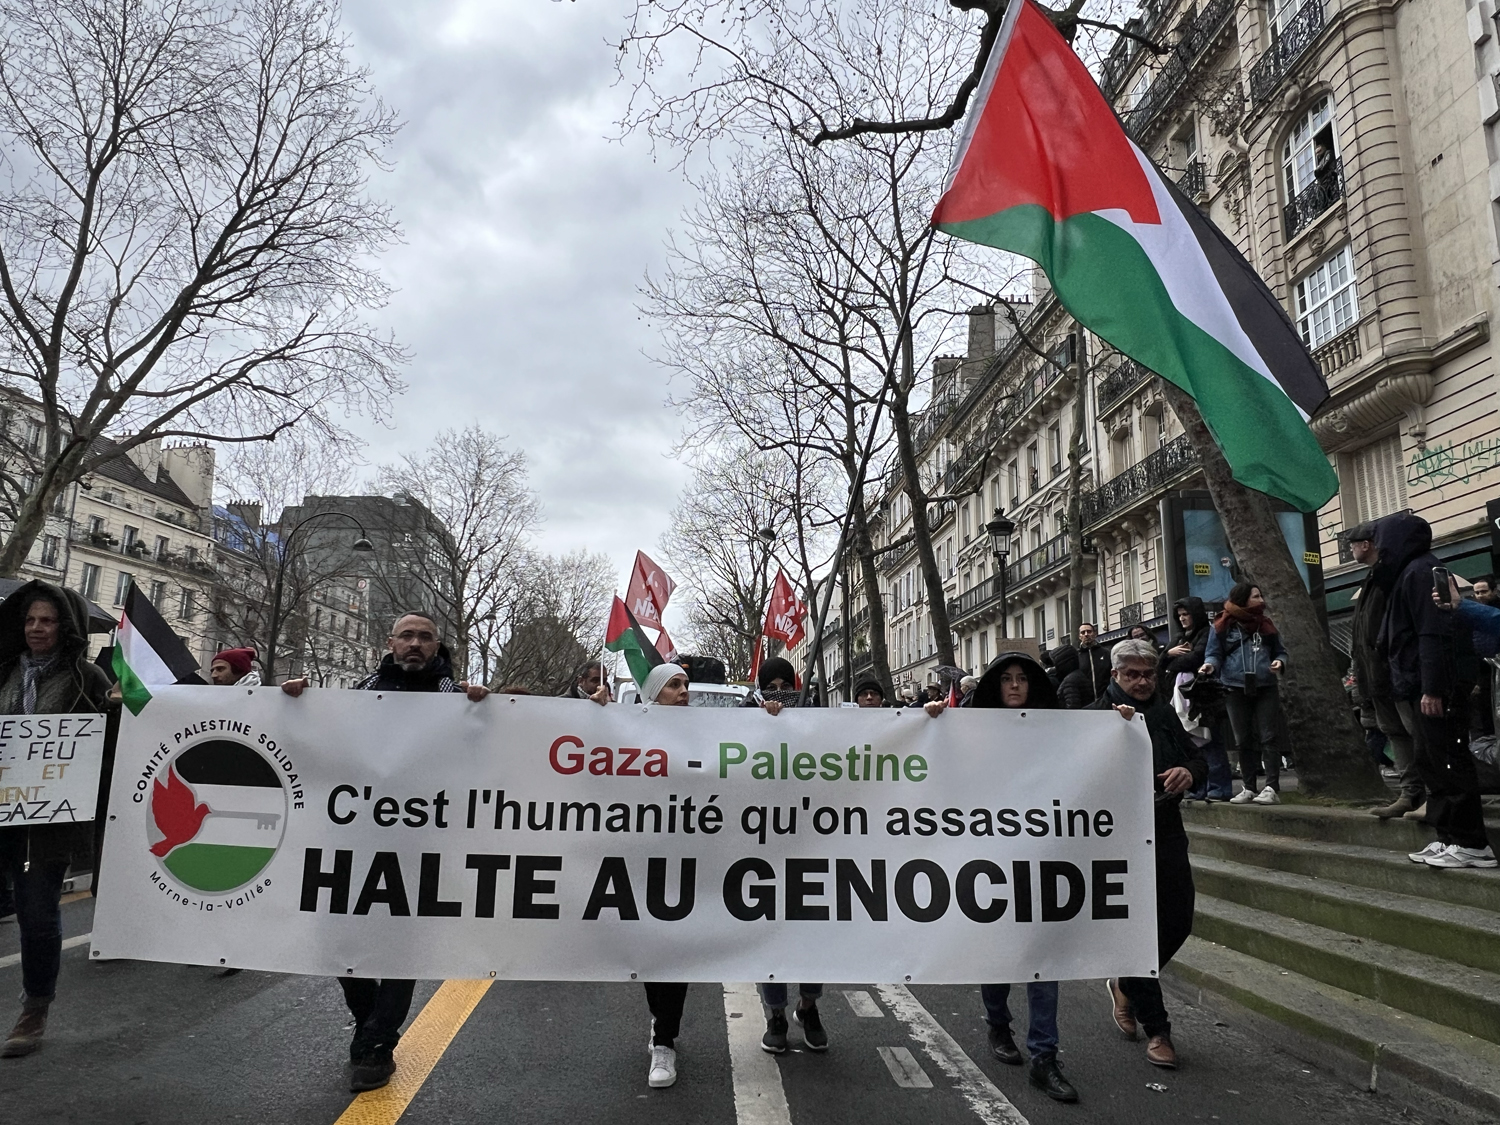 Halte au génocide